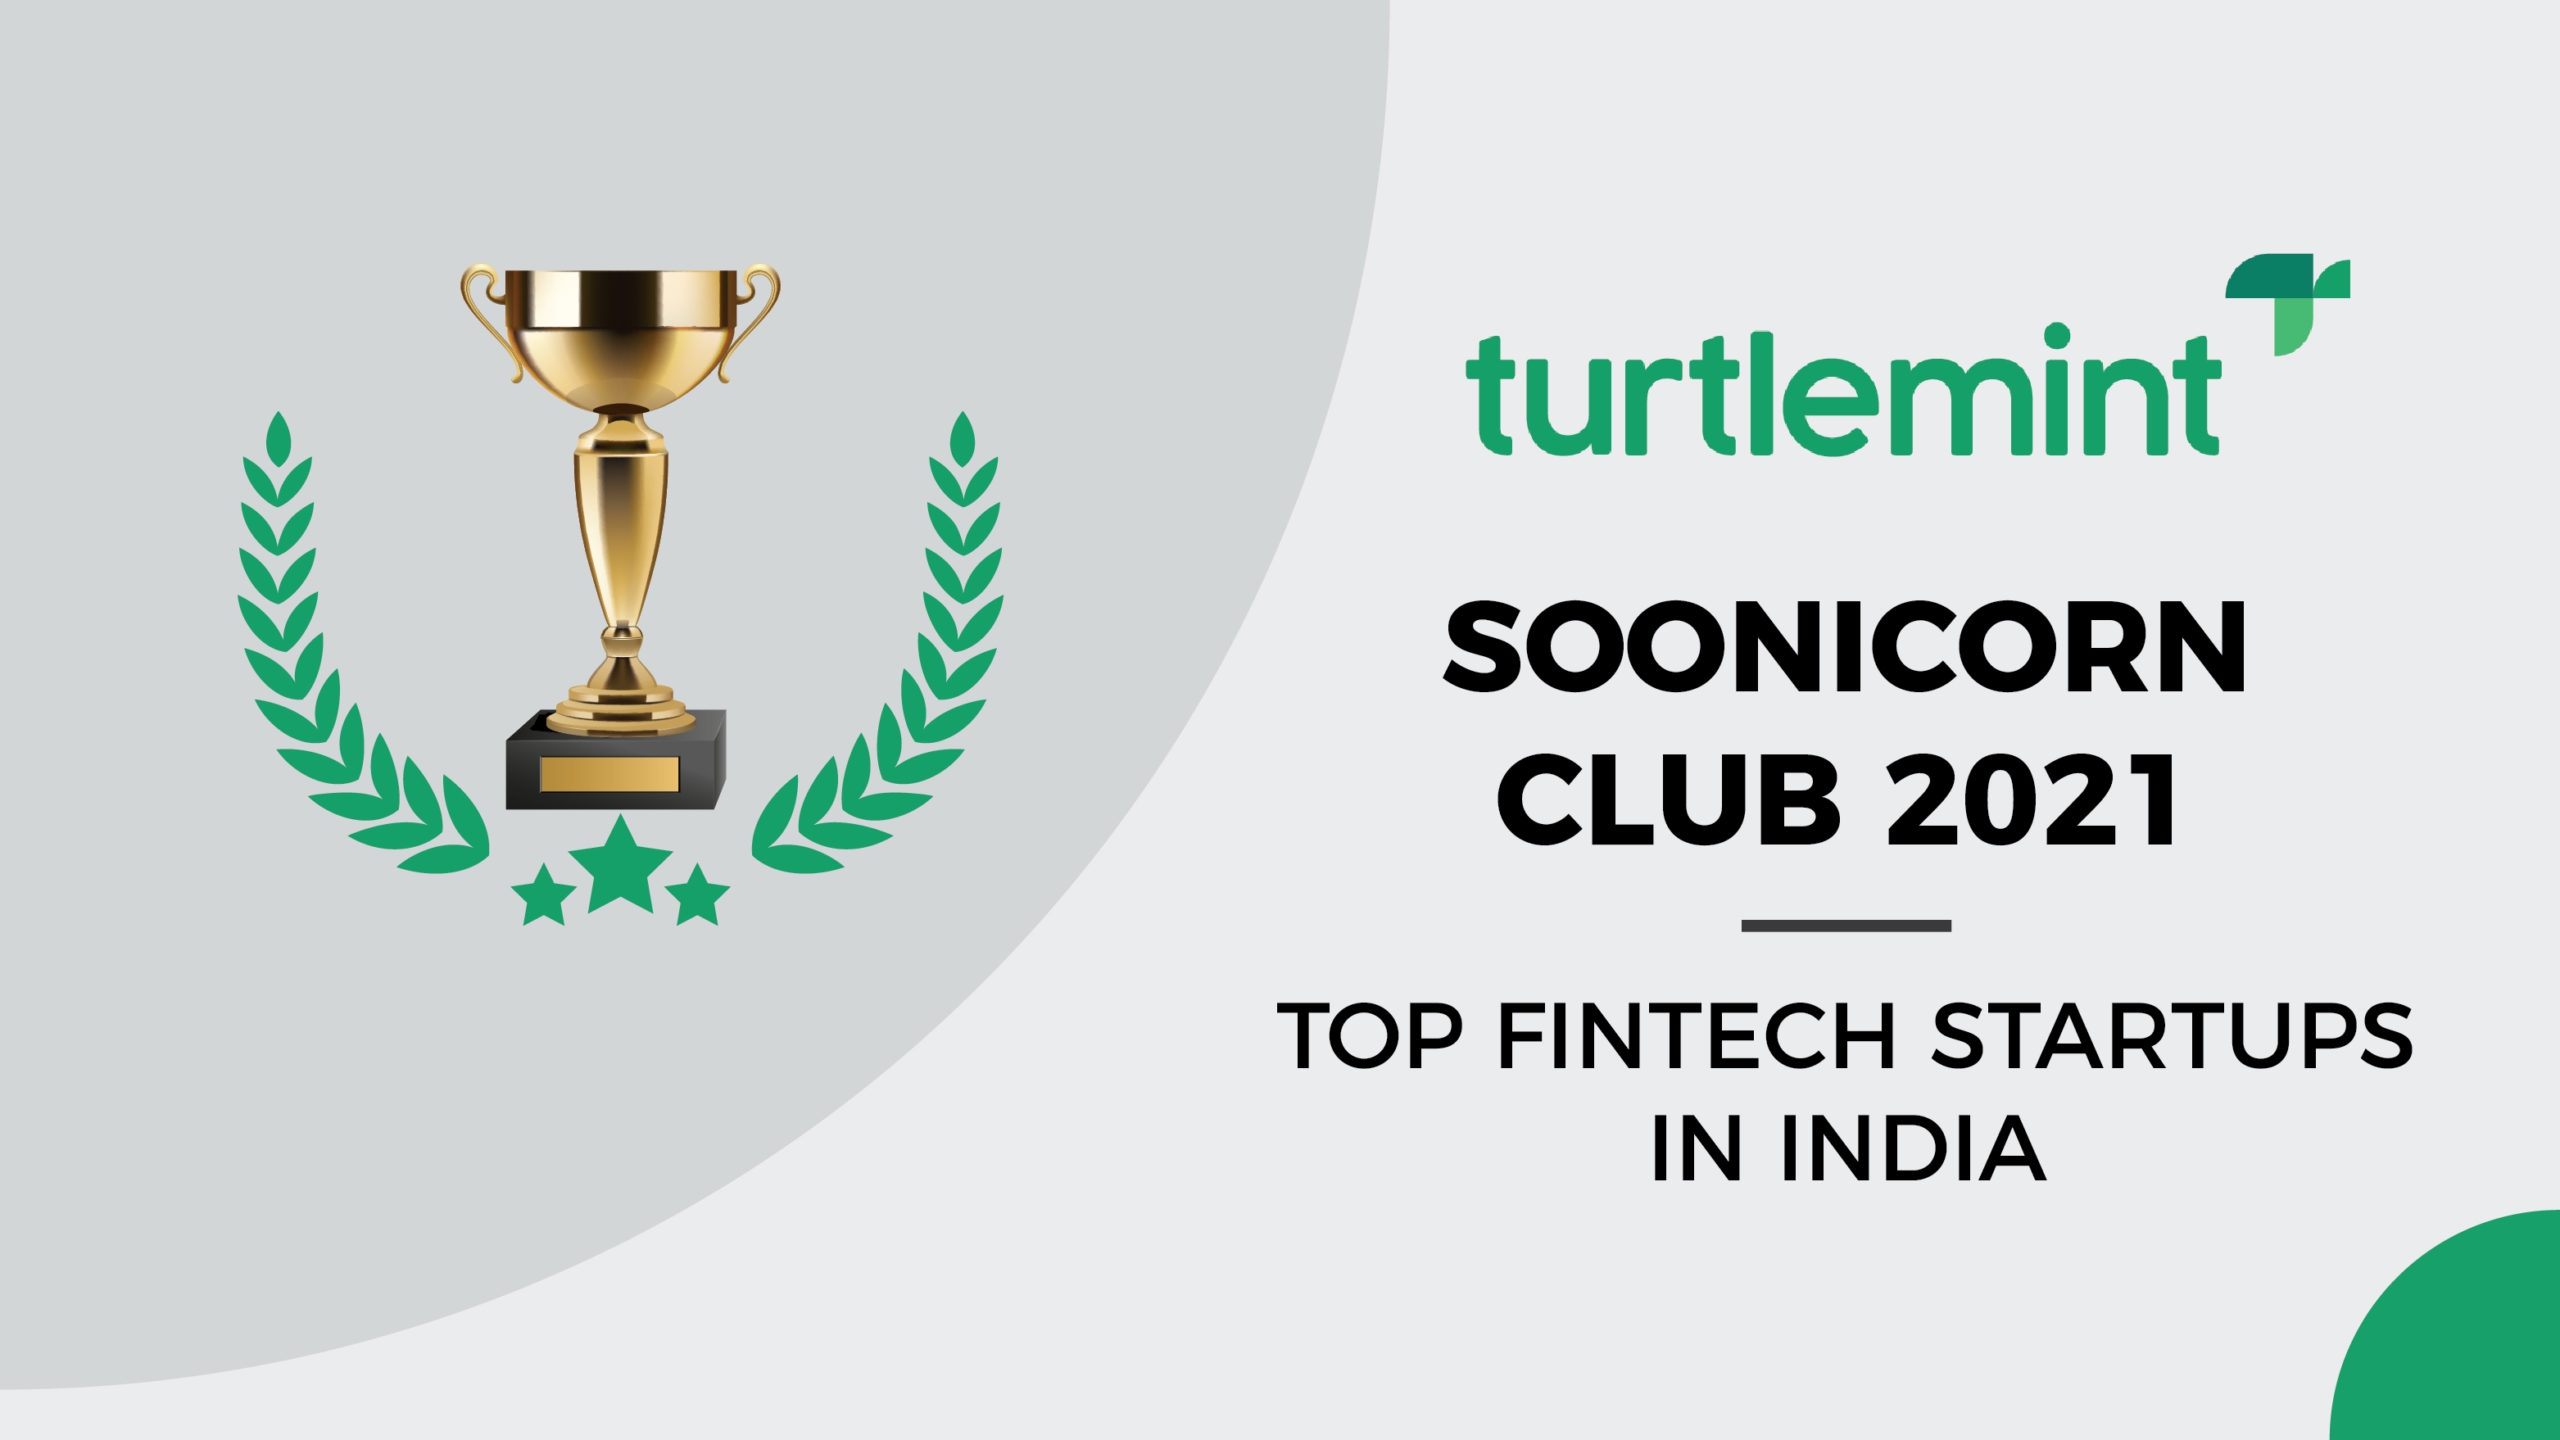 Turtlemint joins the “Soonicorn club” by winning tracxn’s “Soonicorn Club Awards 2021”